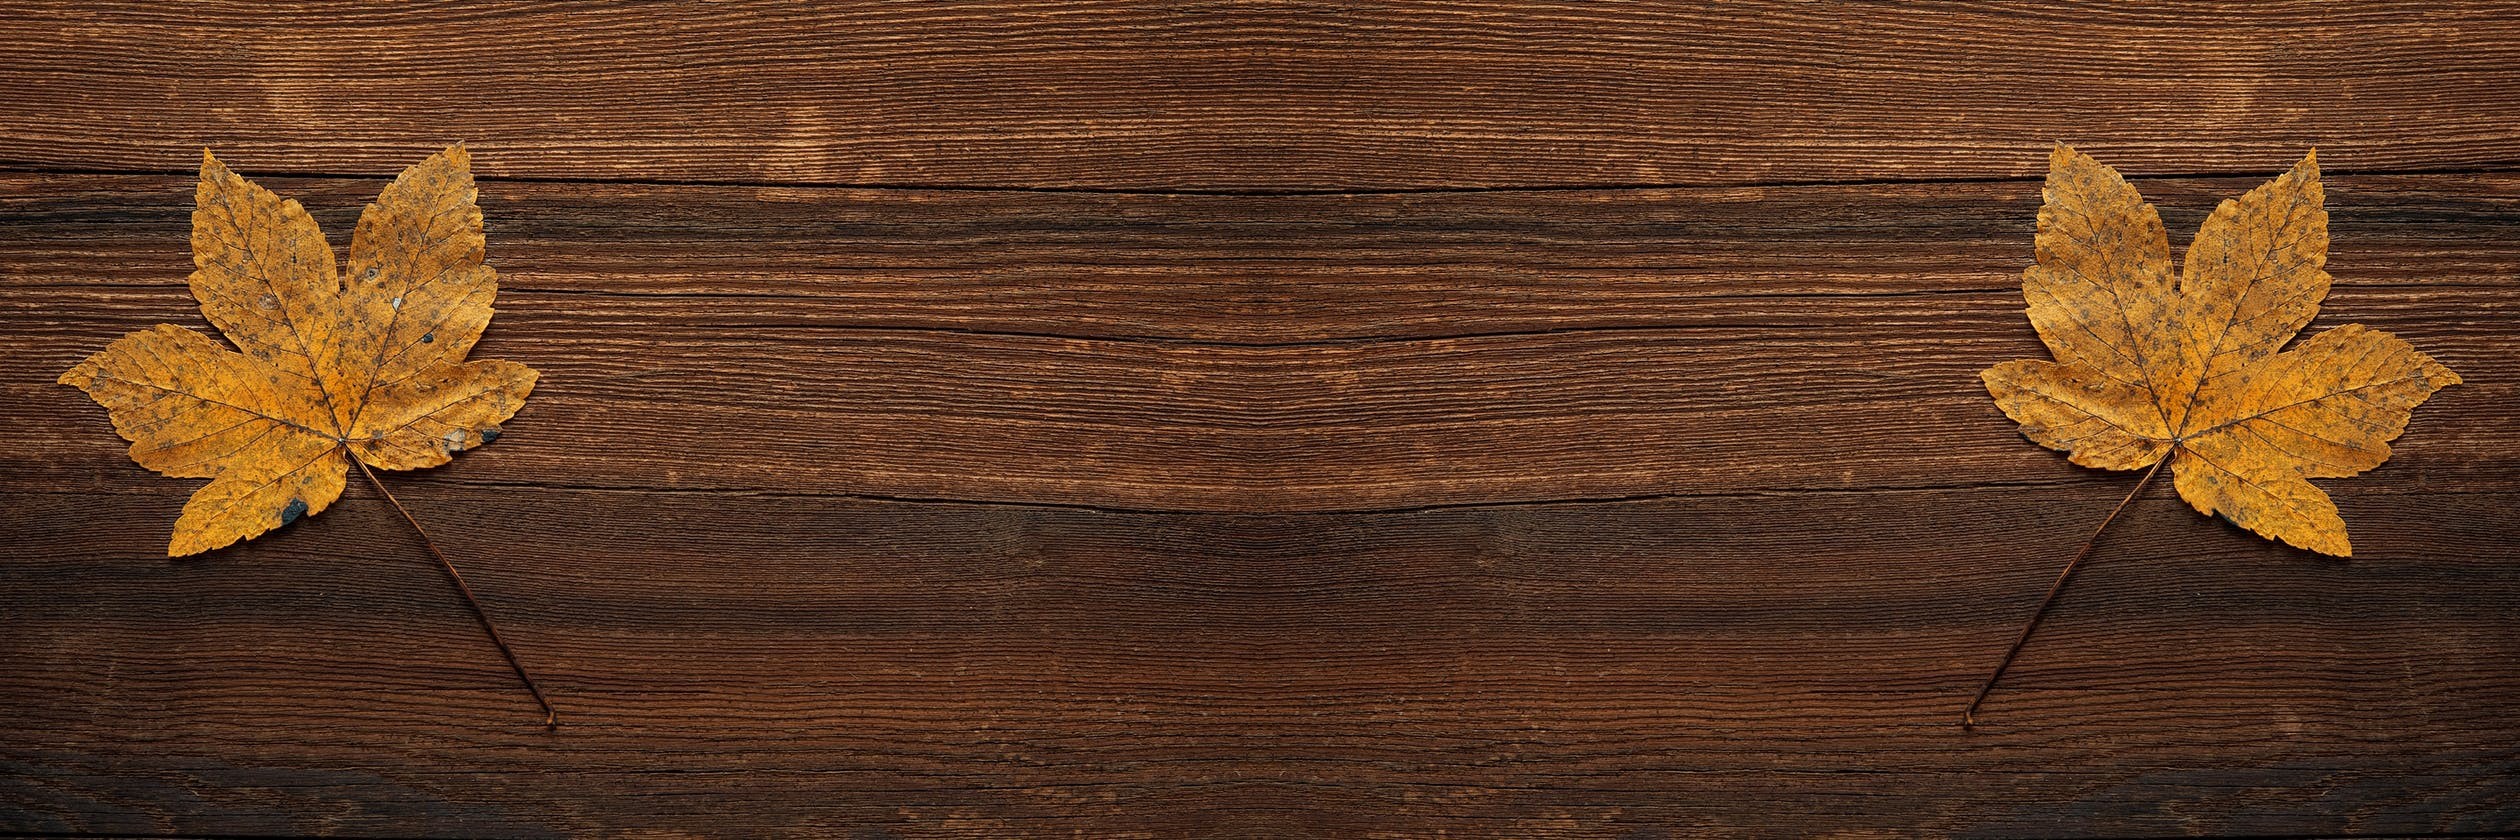 wood.jpeg